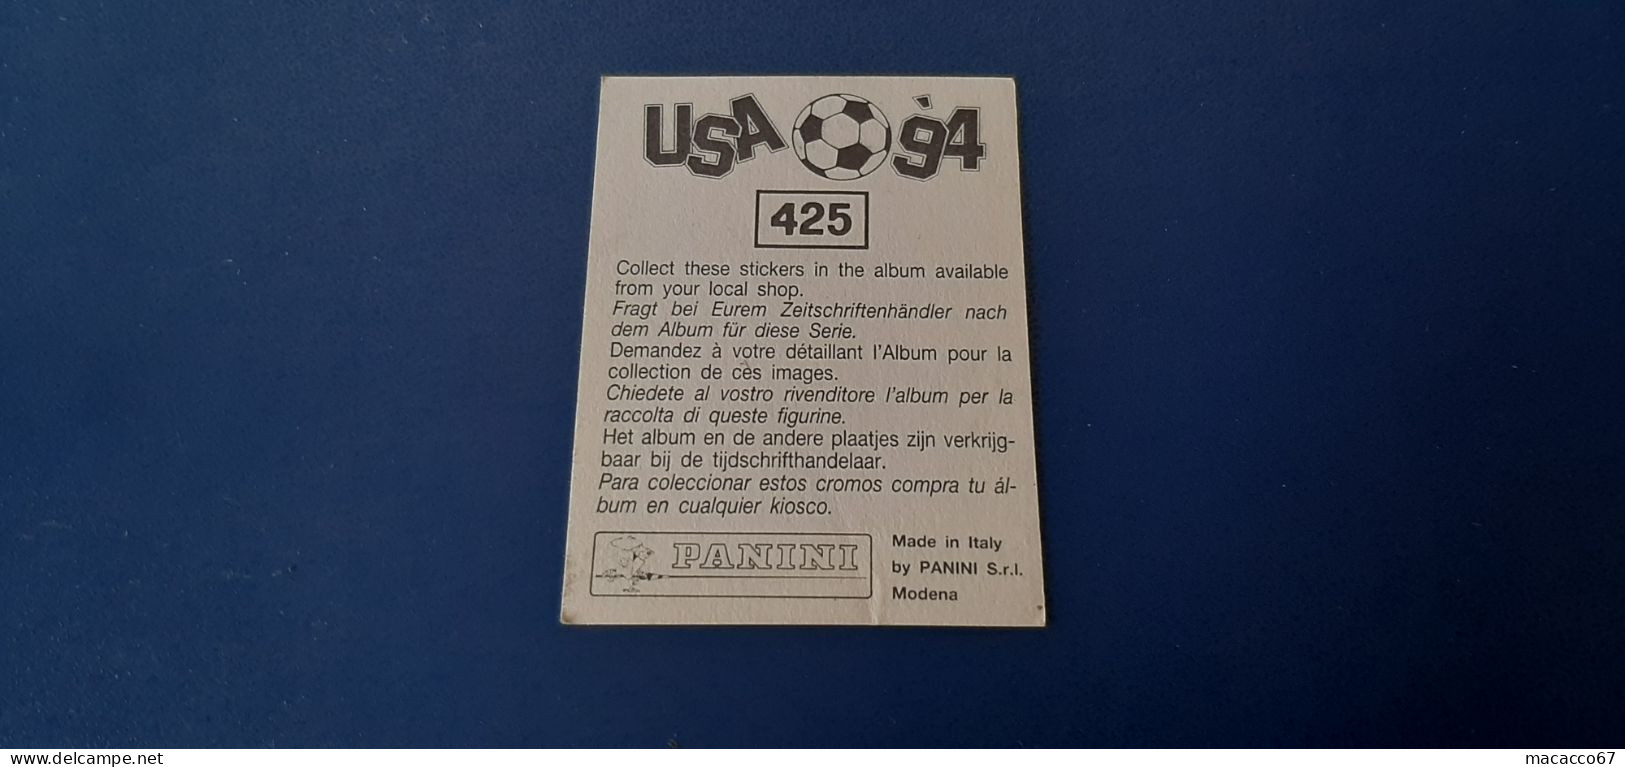 Figurina Panini WM USA 94 - 425 Jonk Olanda - Edizione Italiana